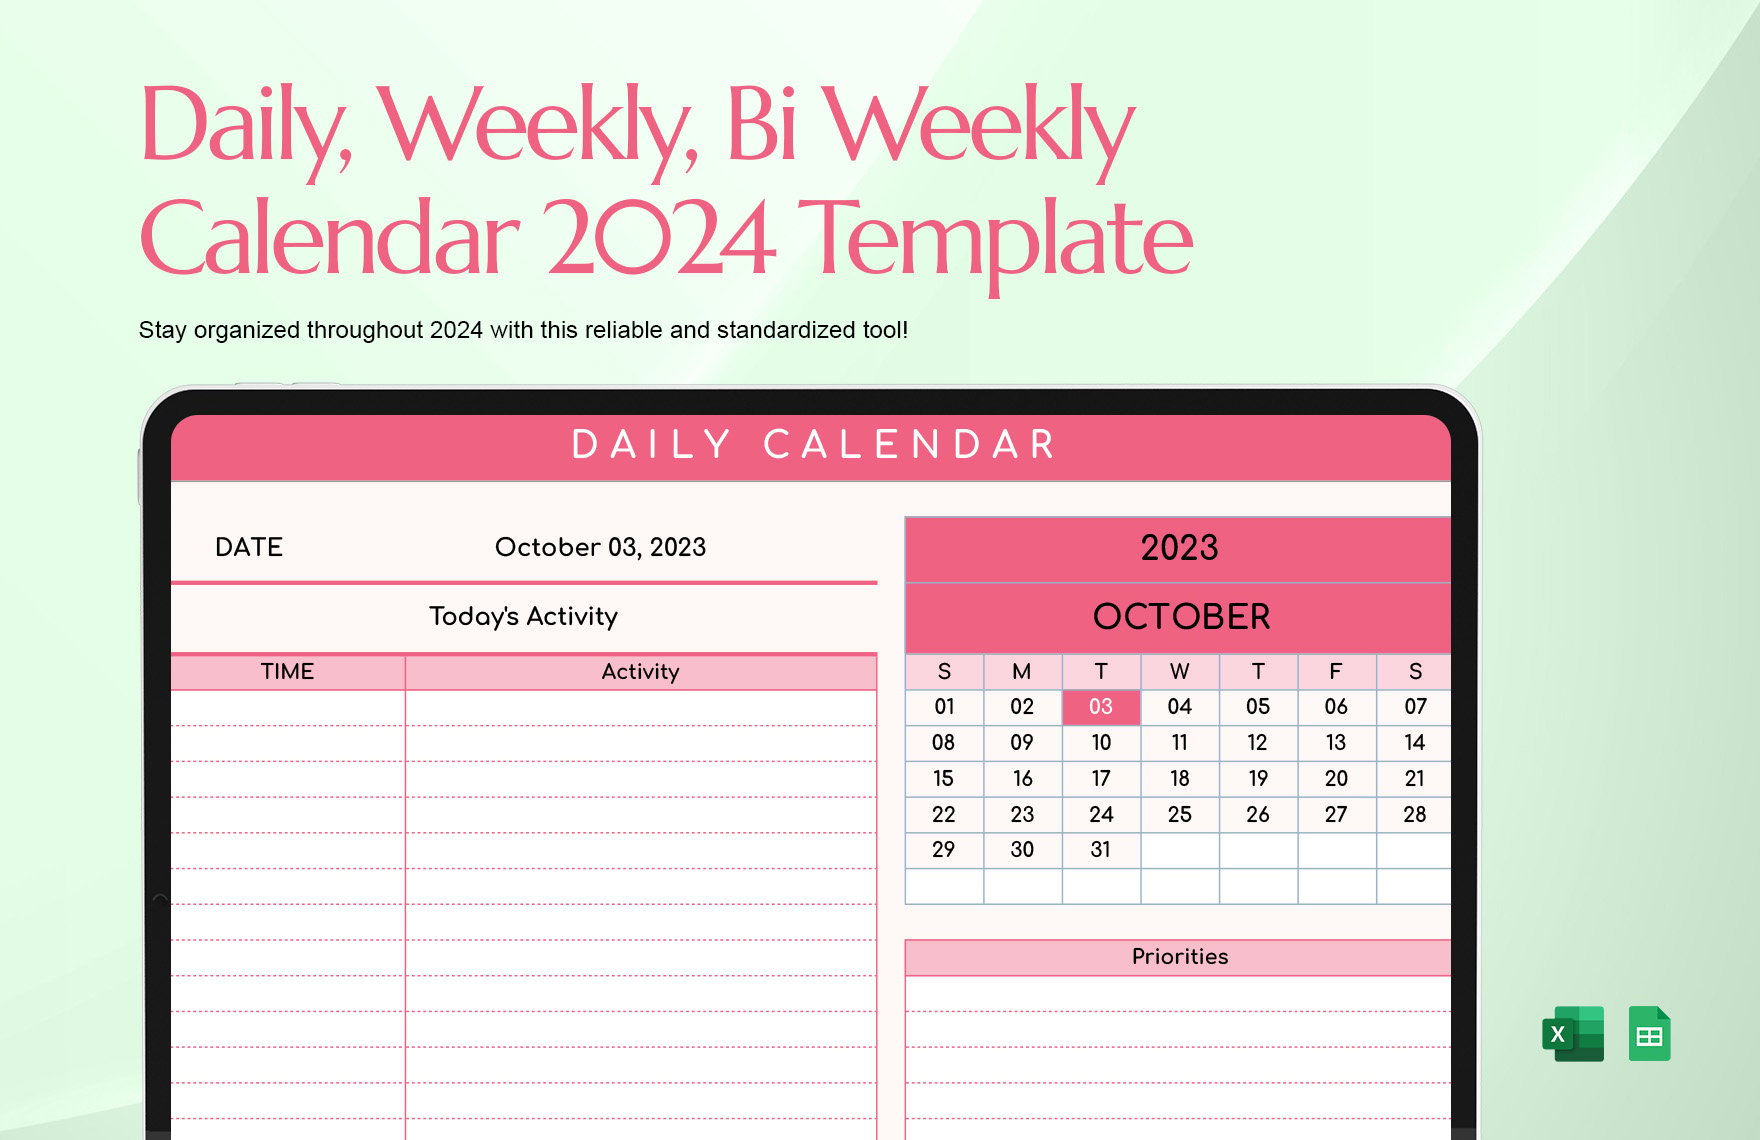 Free Daily, Weekly, Bi Weekly Calendar 2024 Template in Excel, Google Sheets